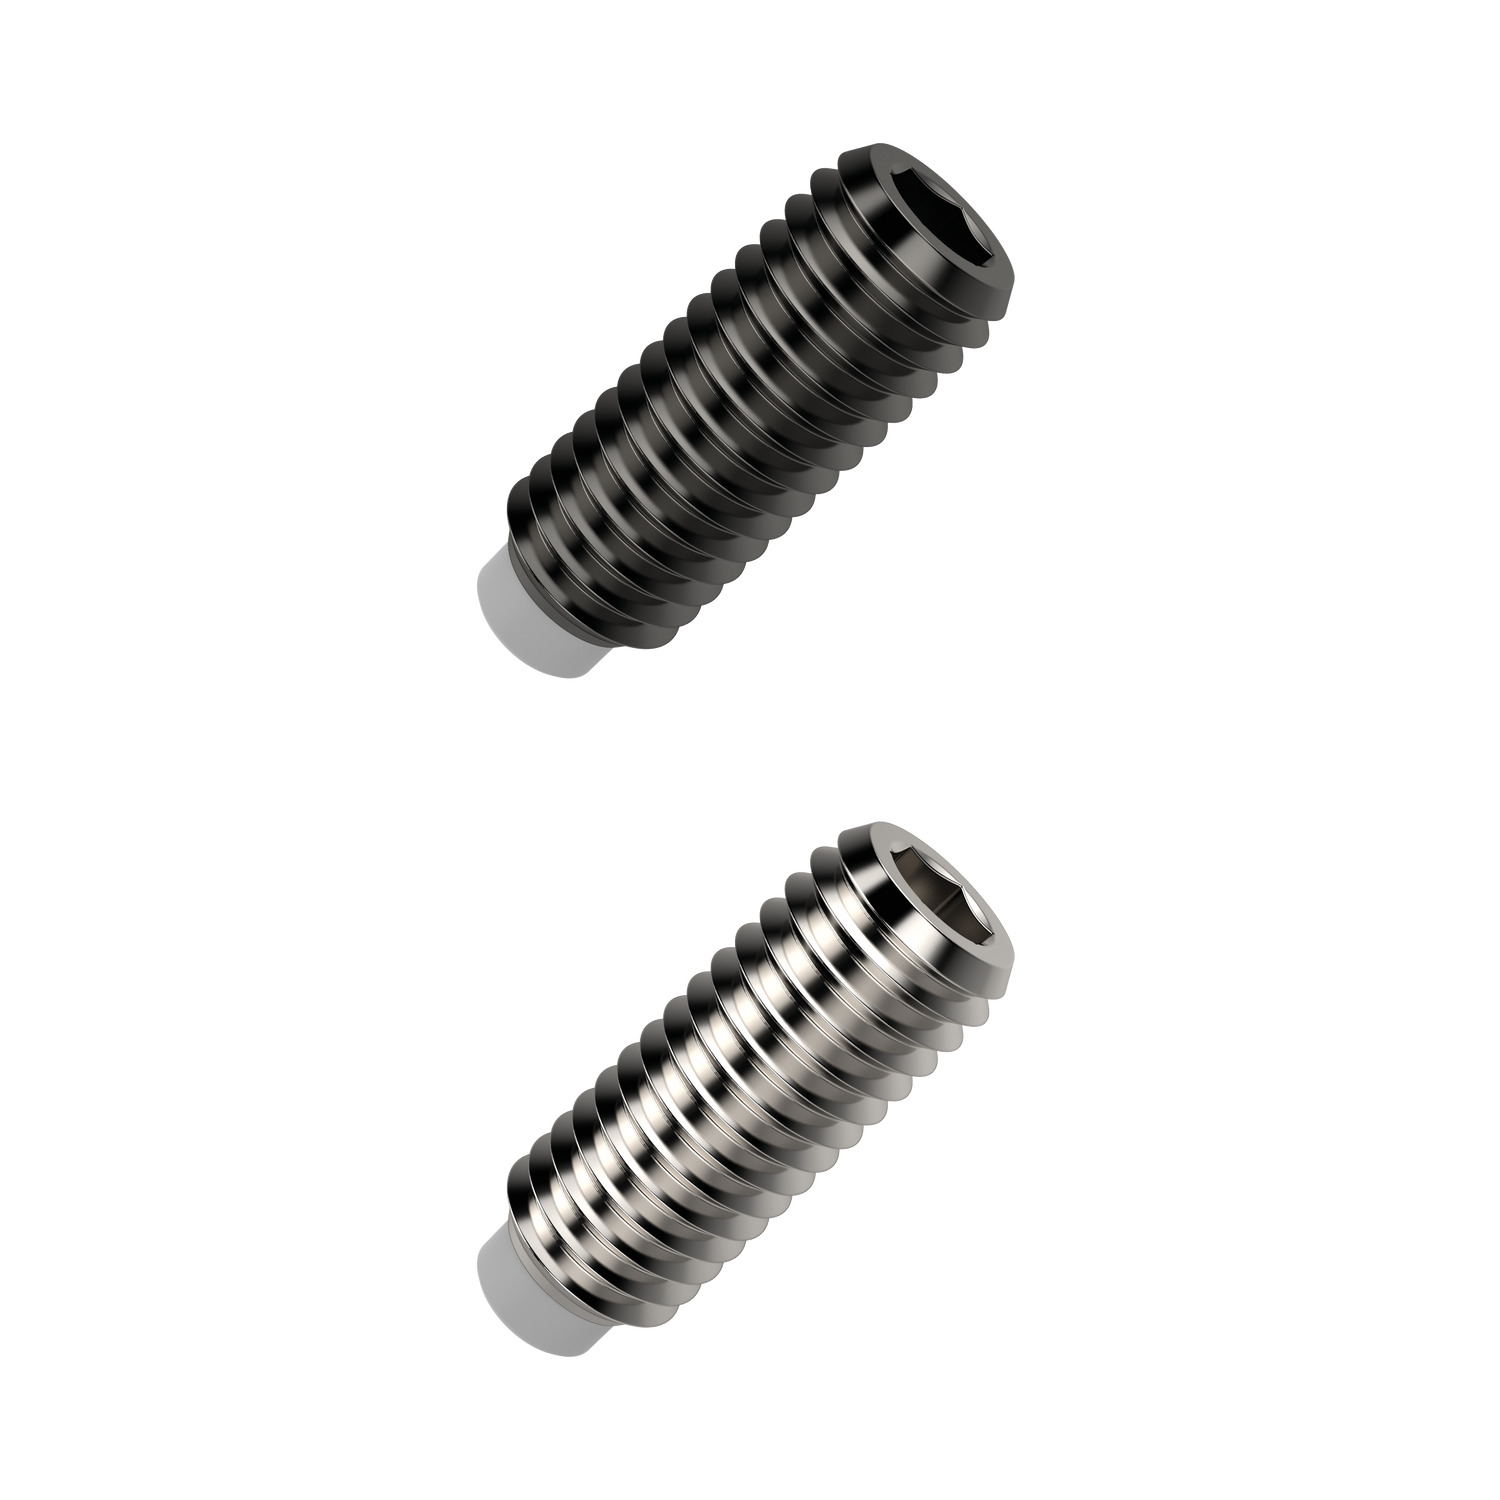 Product 34160.2, Thrust Screws - Plastic Pad stainless steel / 